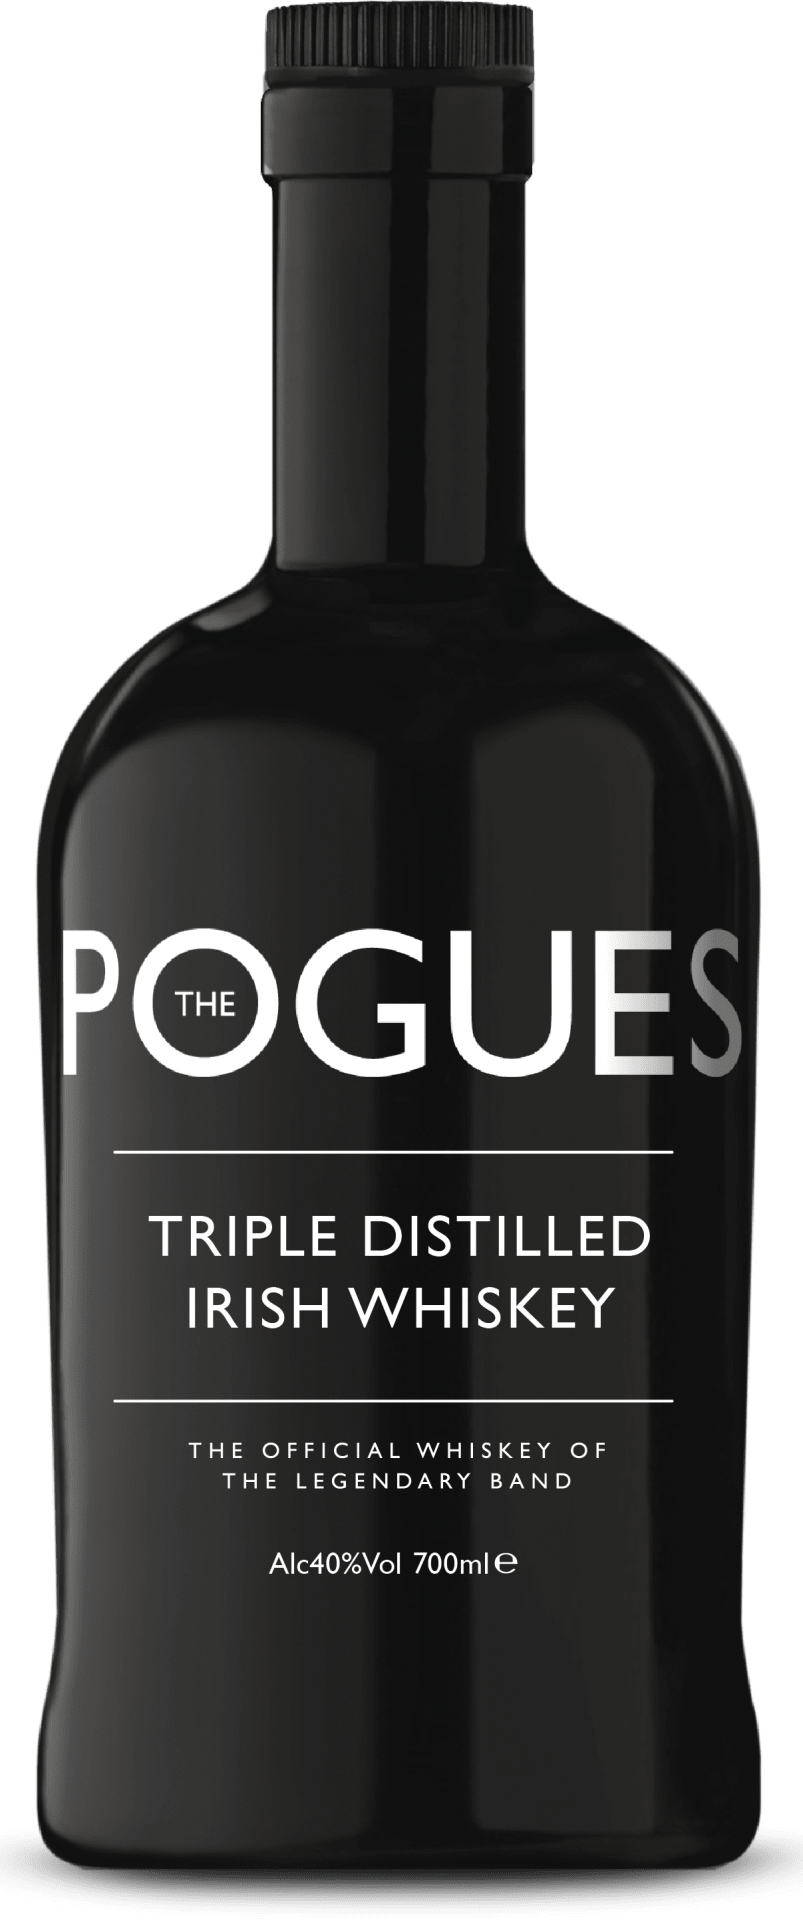 The Pogues Triple Distilled Irish Whiskey